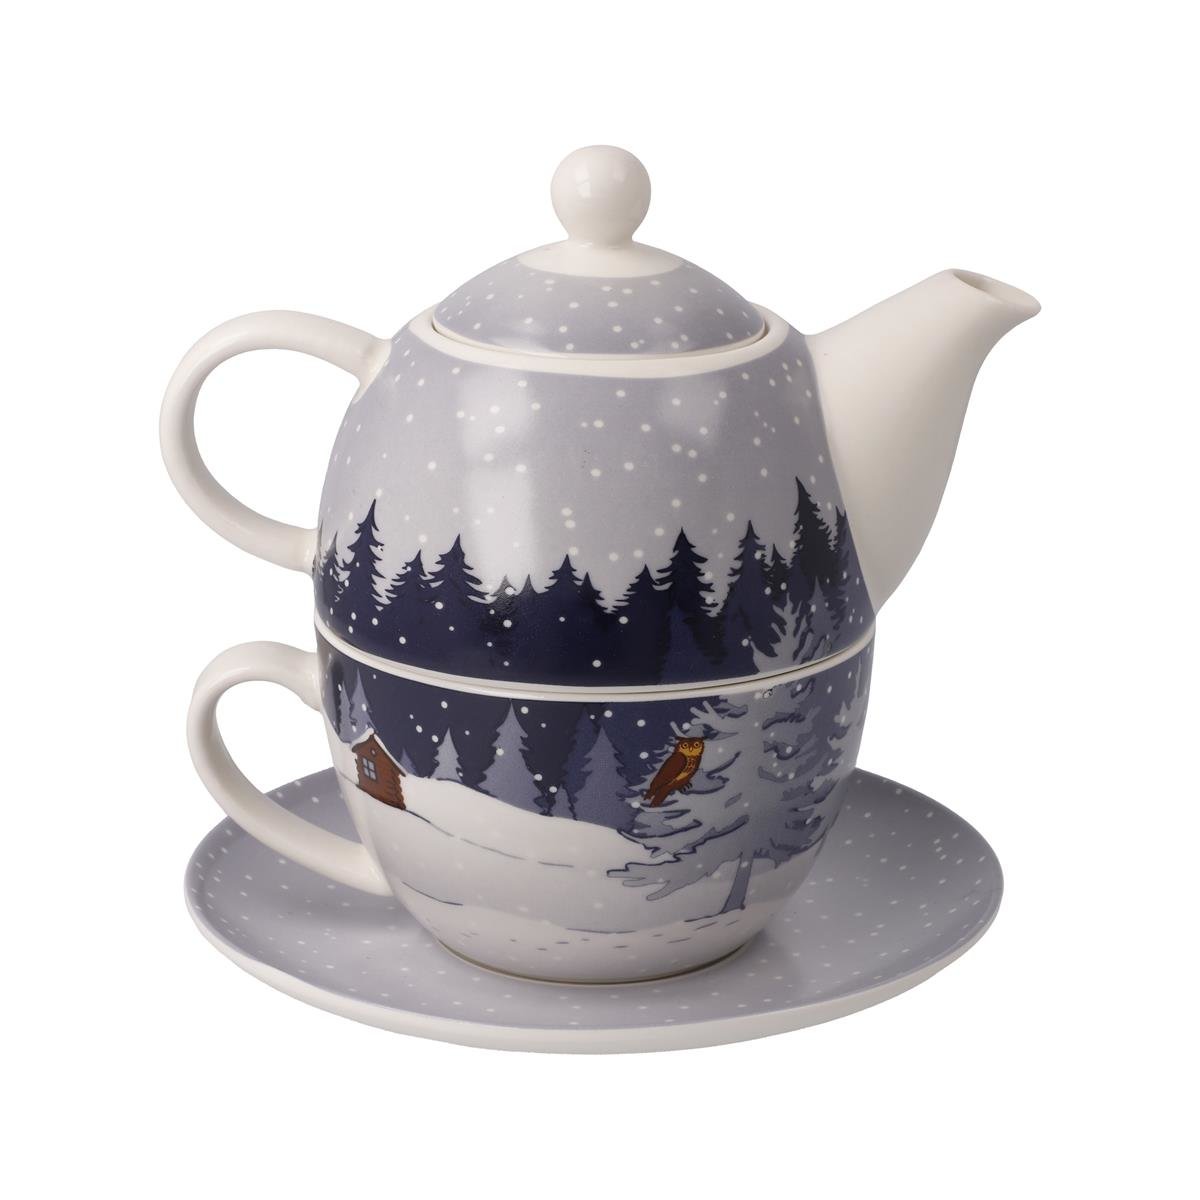 Goebel Tea for China, New 55,00 Winter Woods, € Bone One